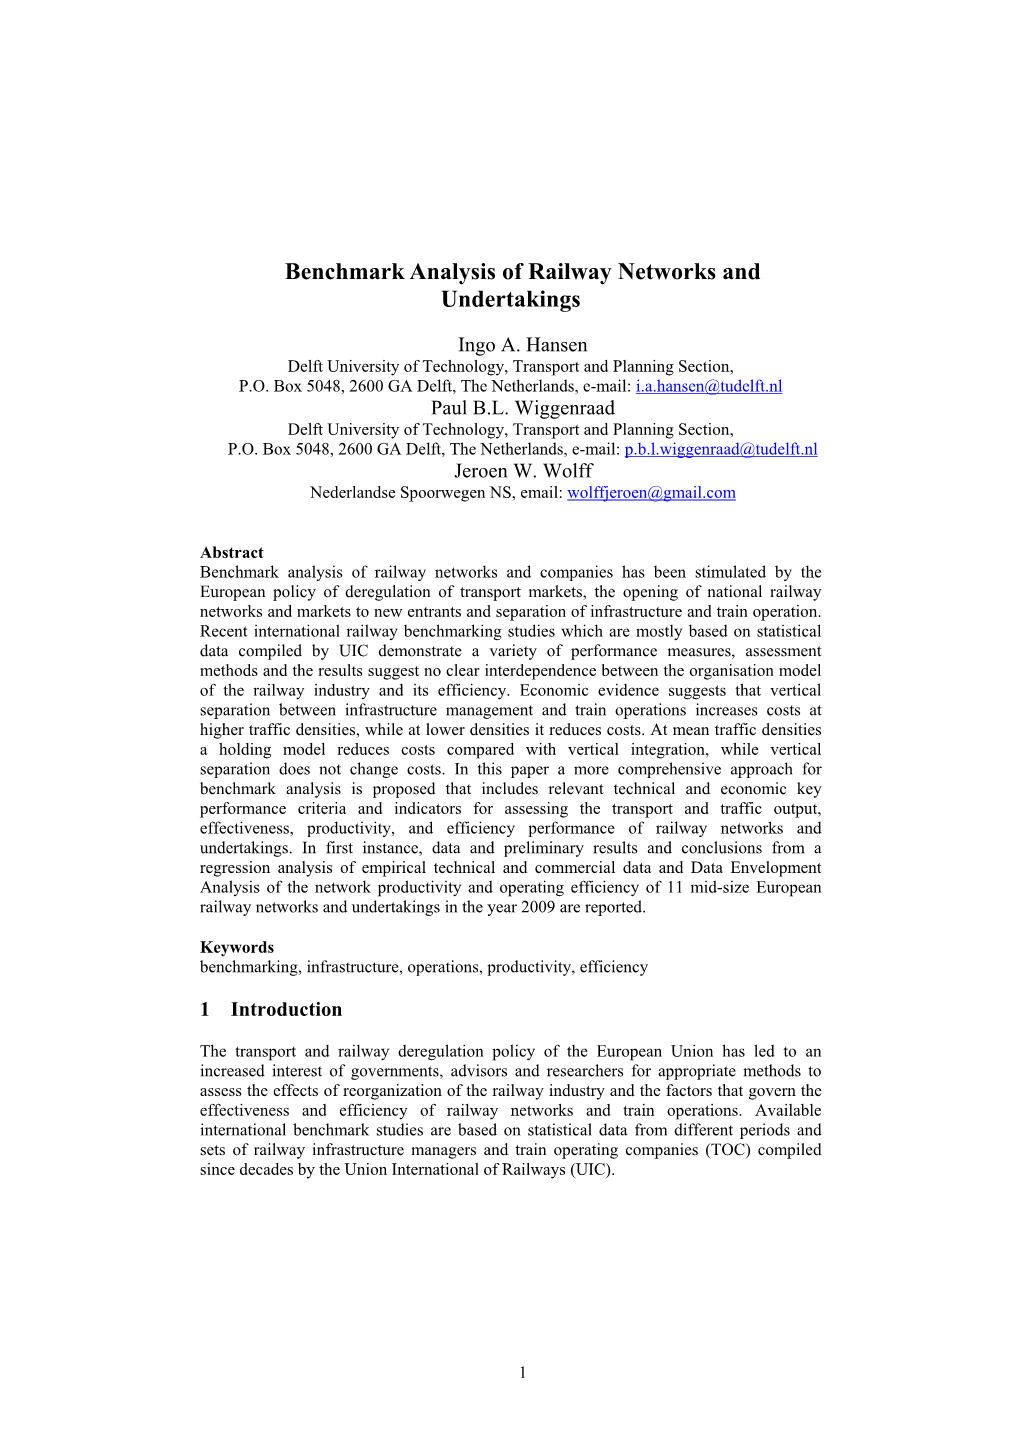 Benchmark Analysis of Railway Networks and Undertakings